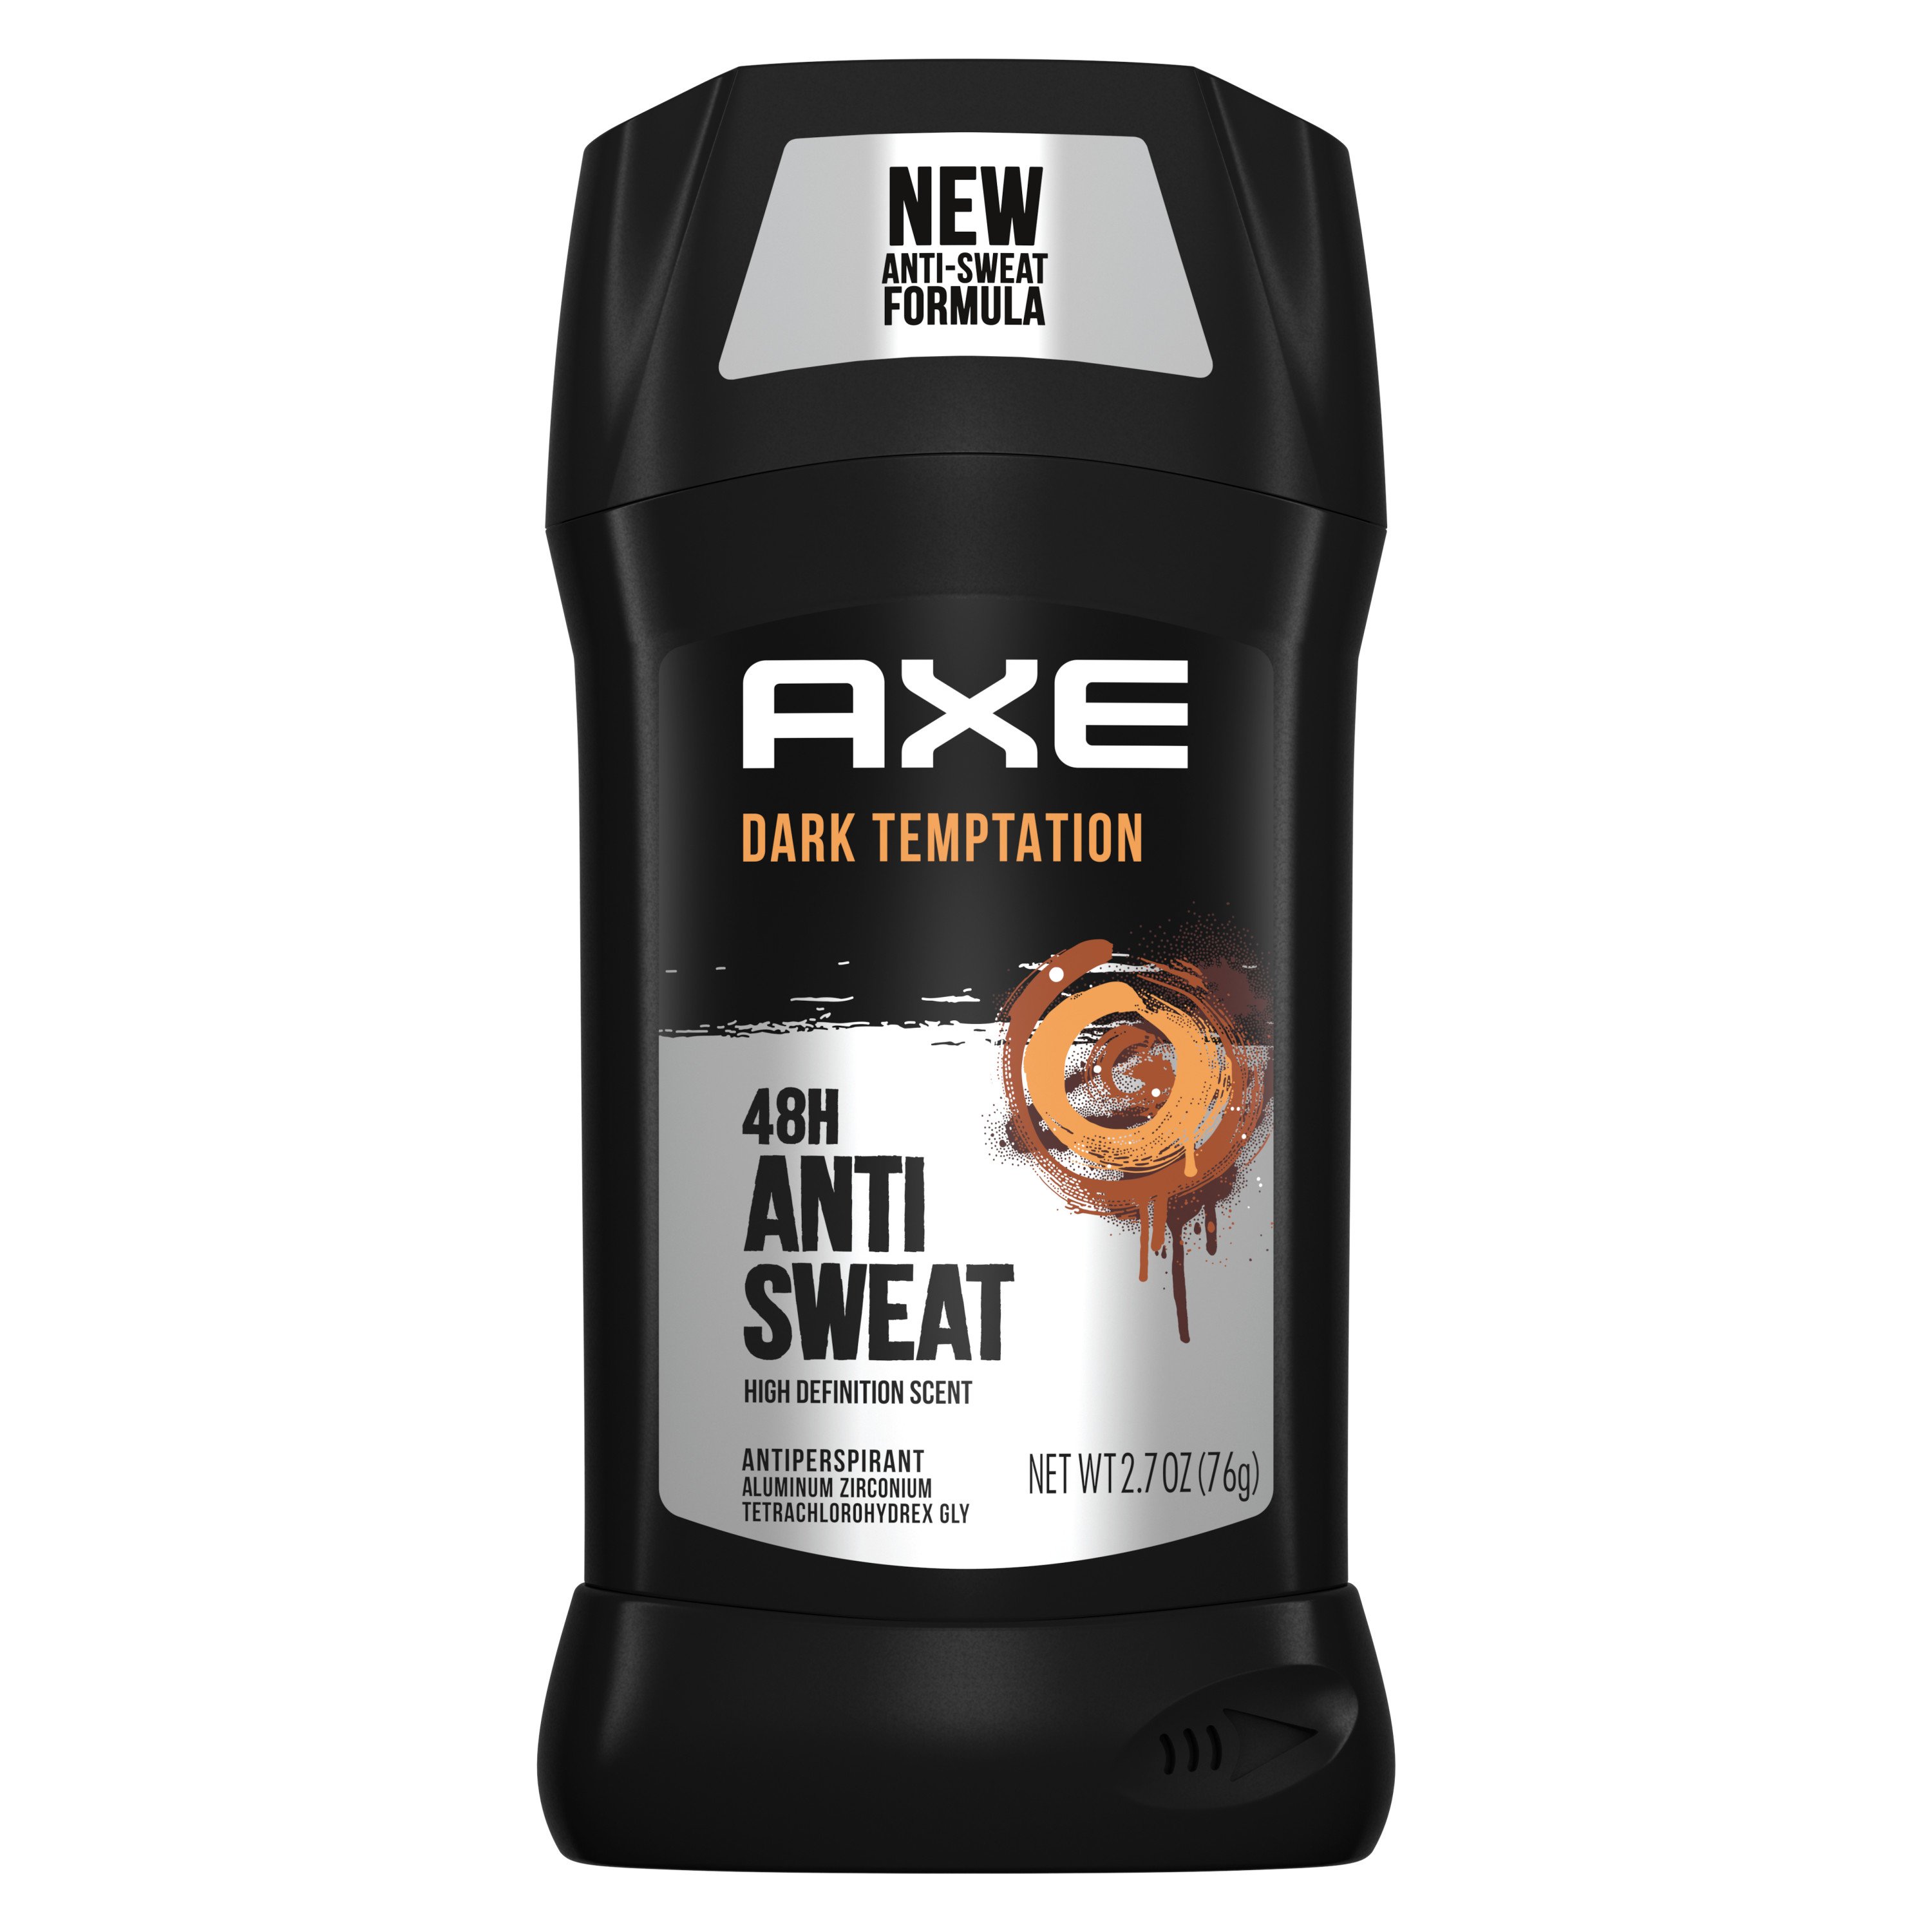 AXE Dark Temptation Antiperspirant Deodorant Stick for Men - Shop ...